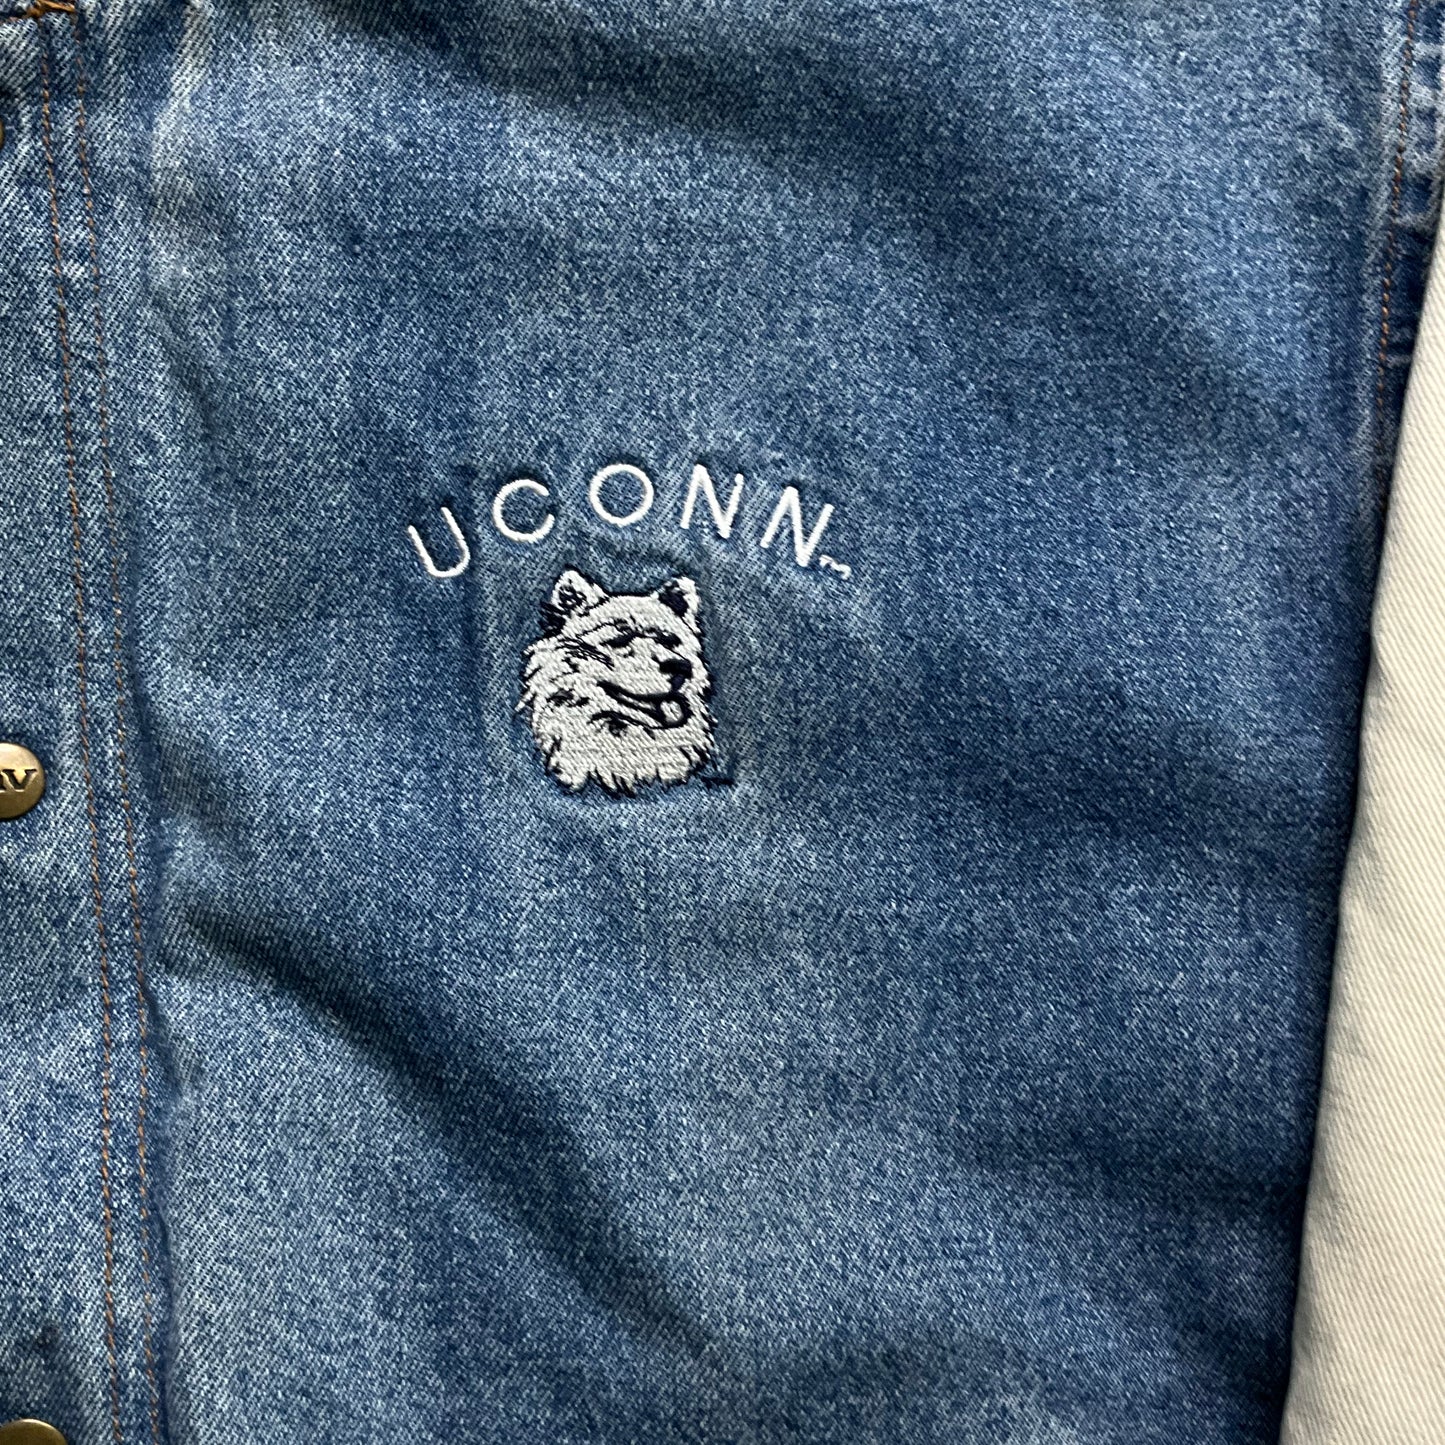 Vintage UConn Varsity Jacket (L)